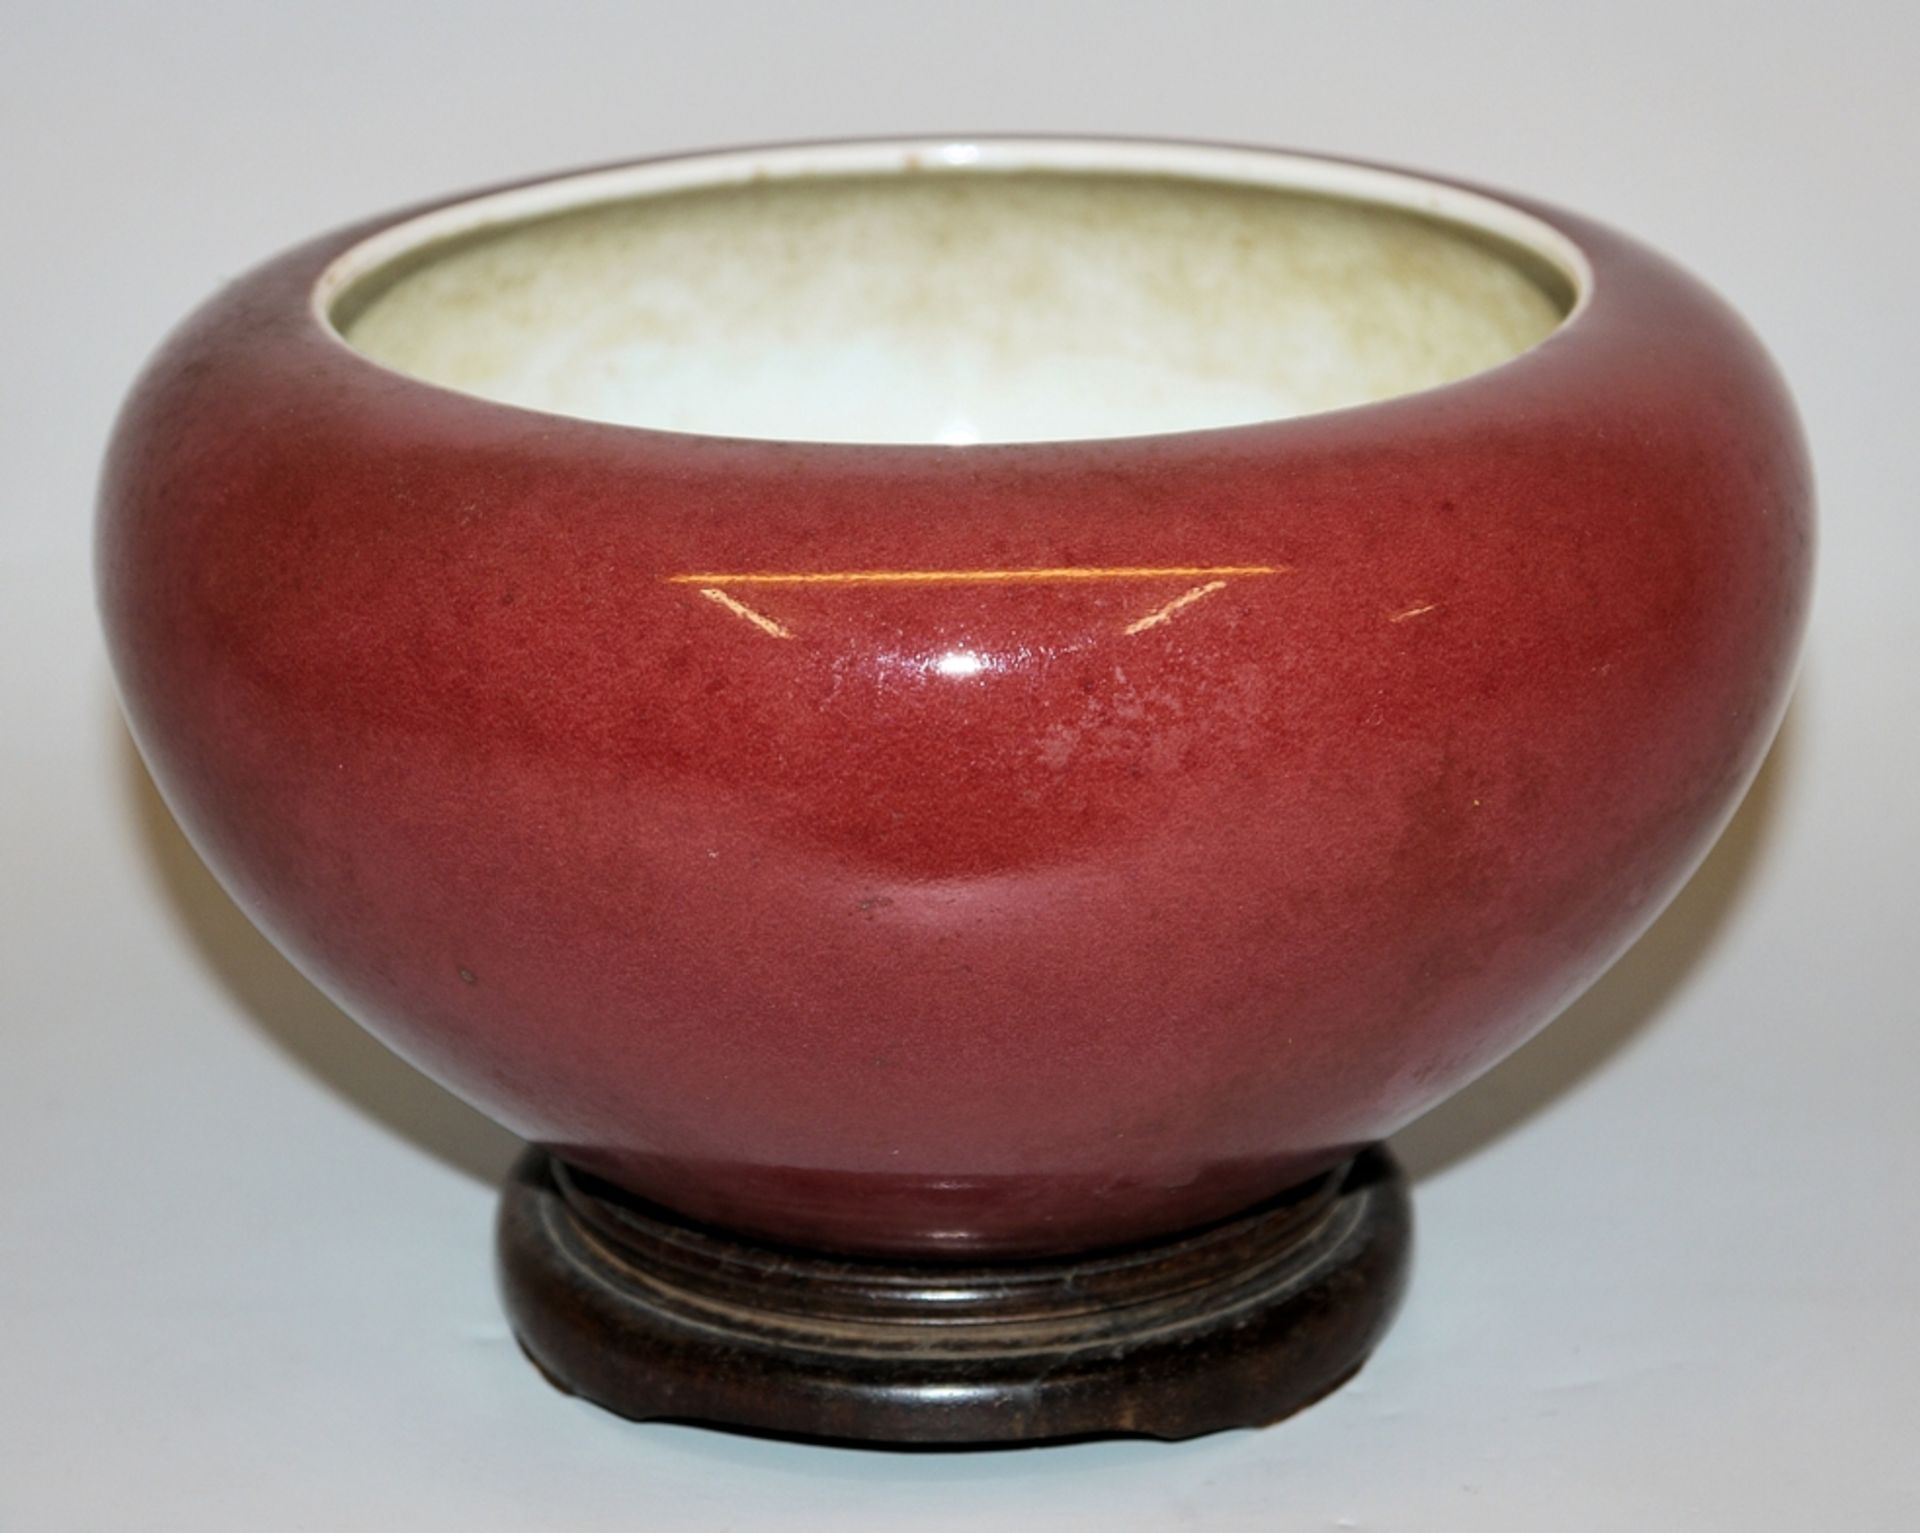 Brush wash bowl with "Peachbloom" glaze, Qing period, China 18th century